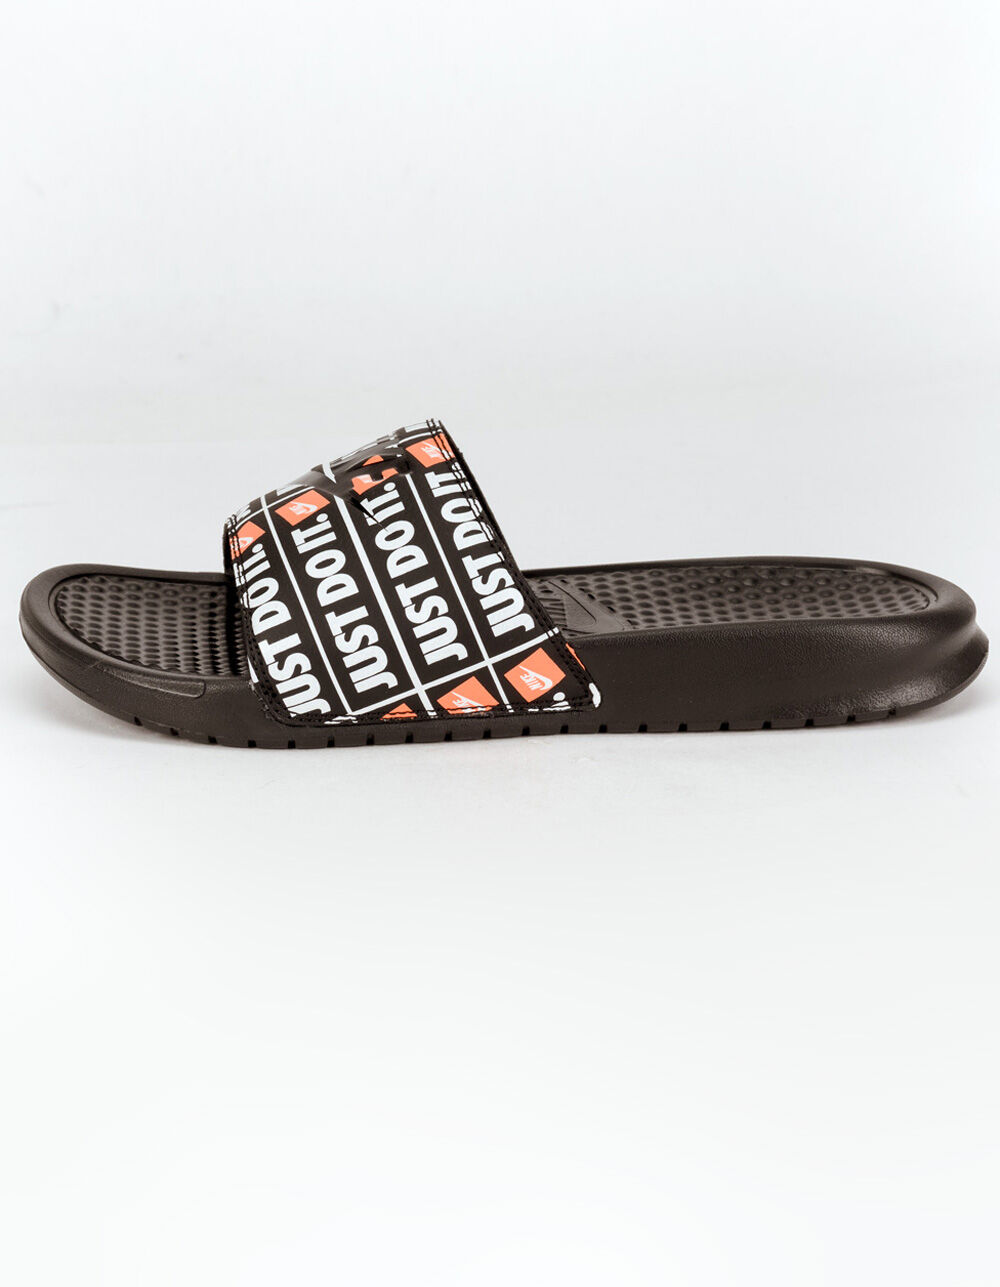 NIKE Benassi JDI Slide Sandals - BLACK COMBO | Tillys